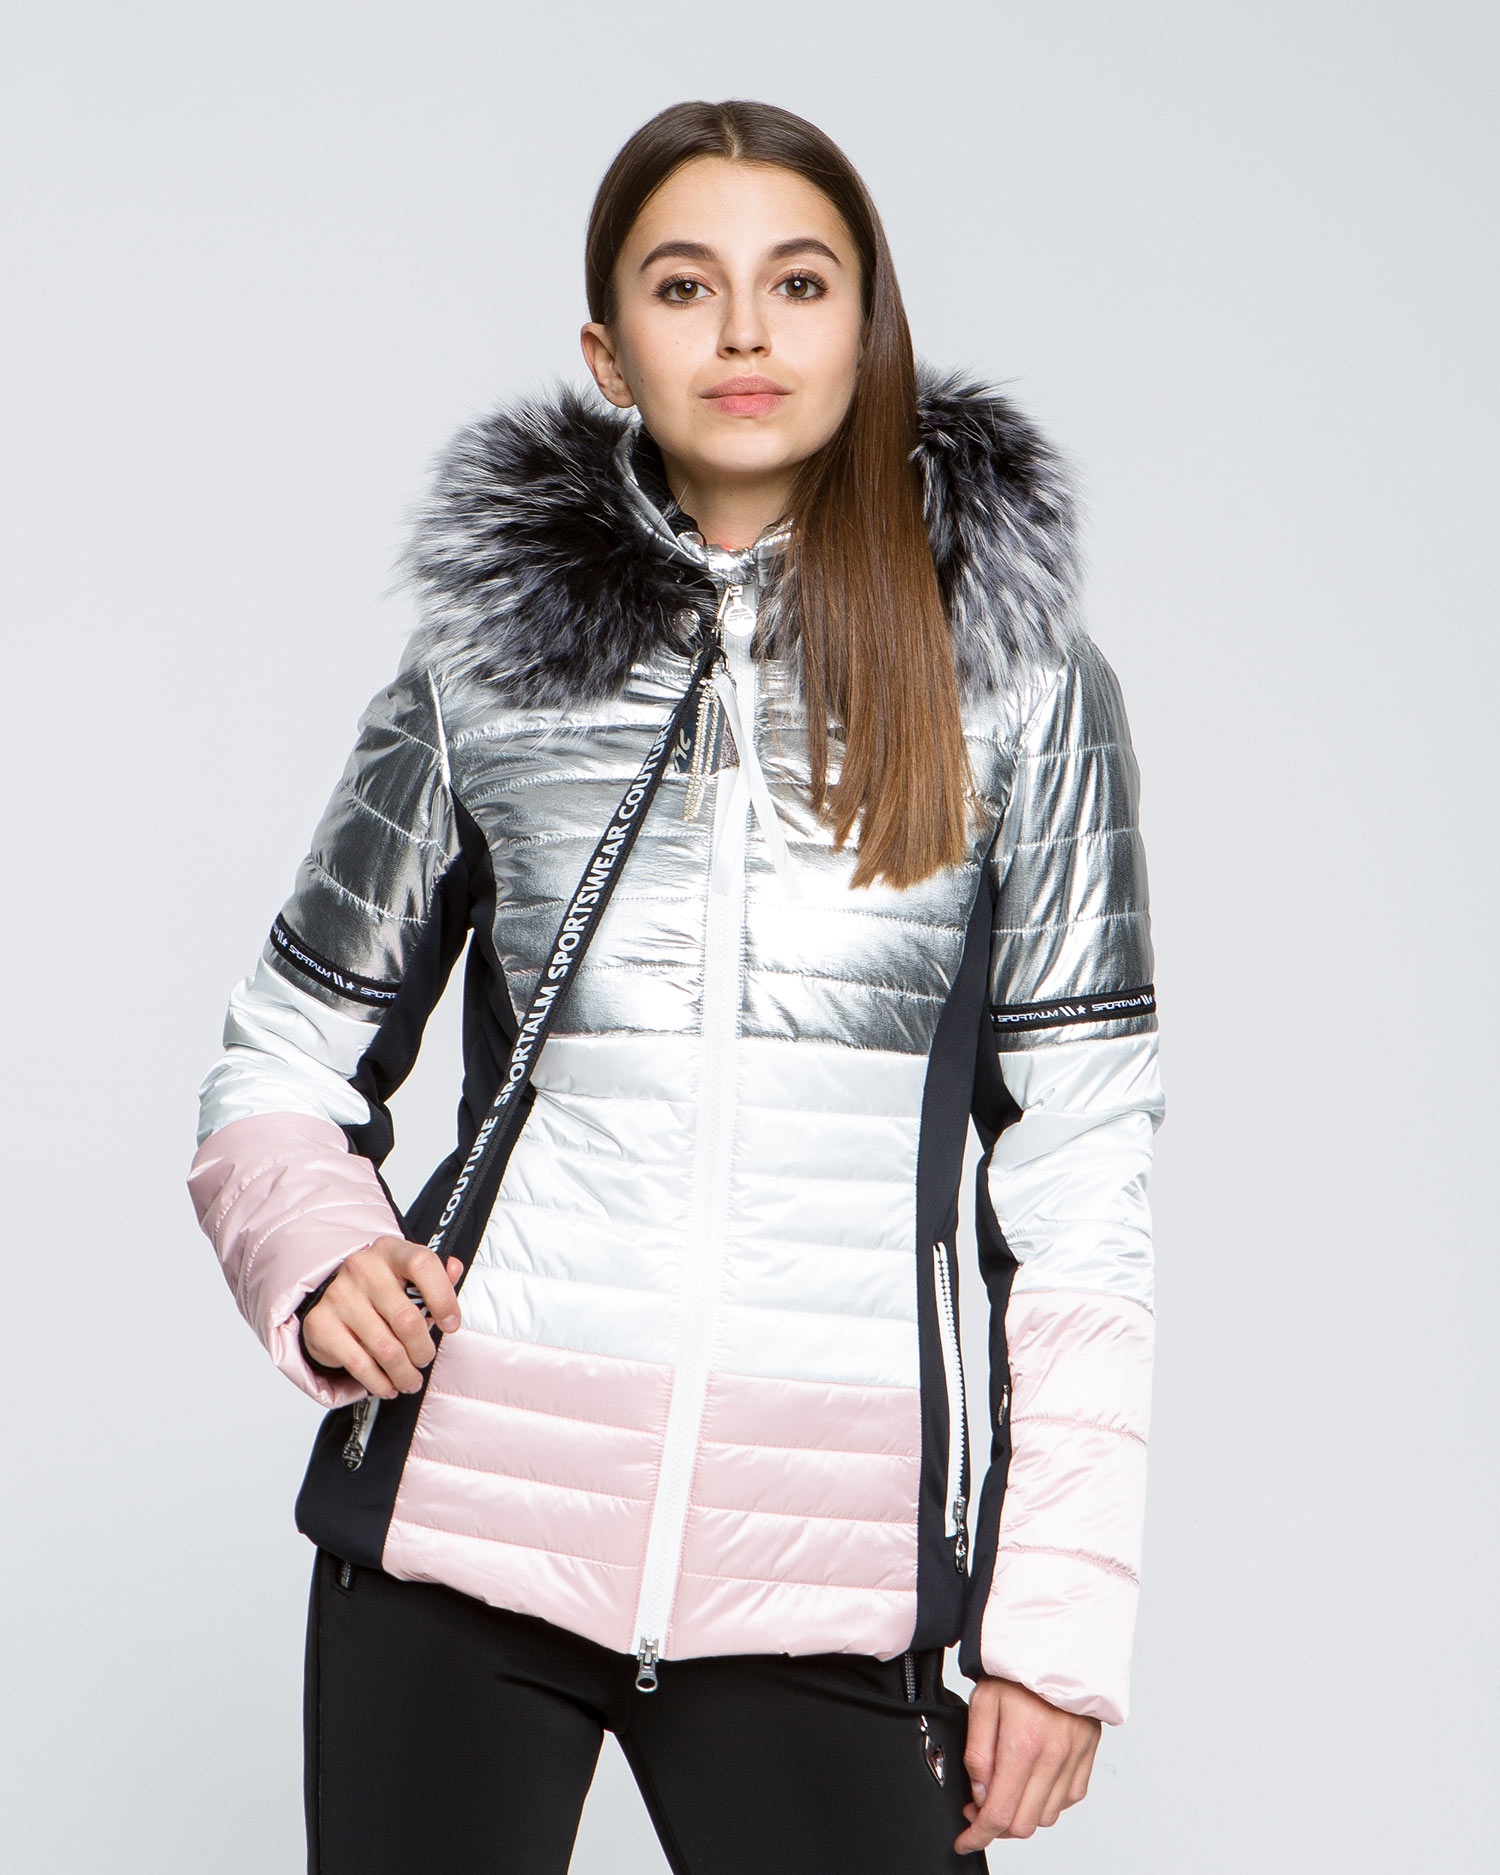 Arturo Serena mero Ski & Snow Jackets | Sportalm Humble m.Kap.Tech | Snow gear